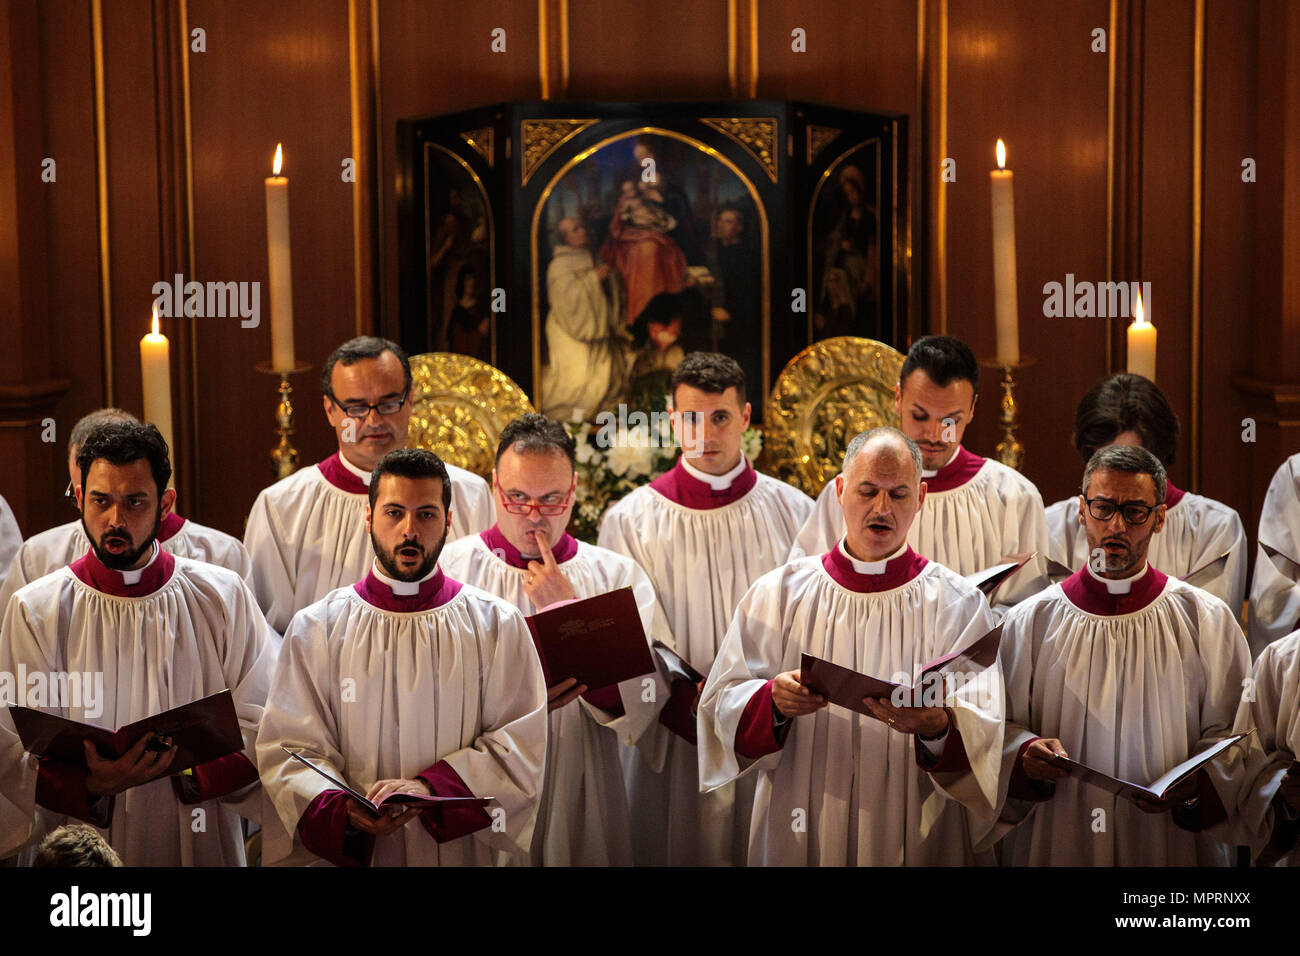 The Capella Musicale Pontificia Cmp The Popes Choir Also Known As The Sistine Chapel Choir 